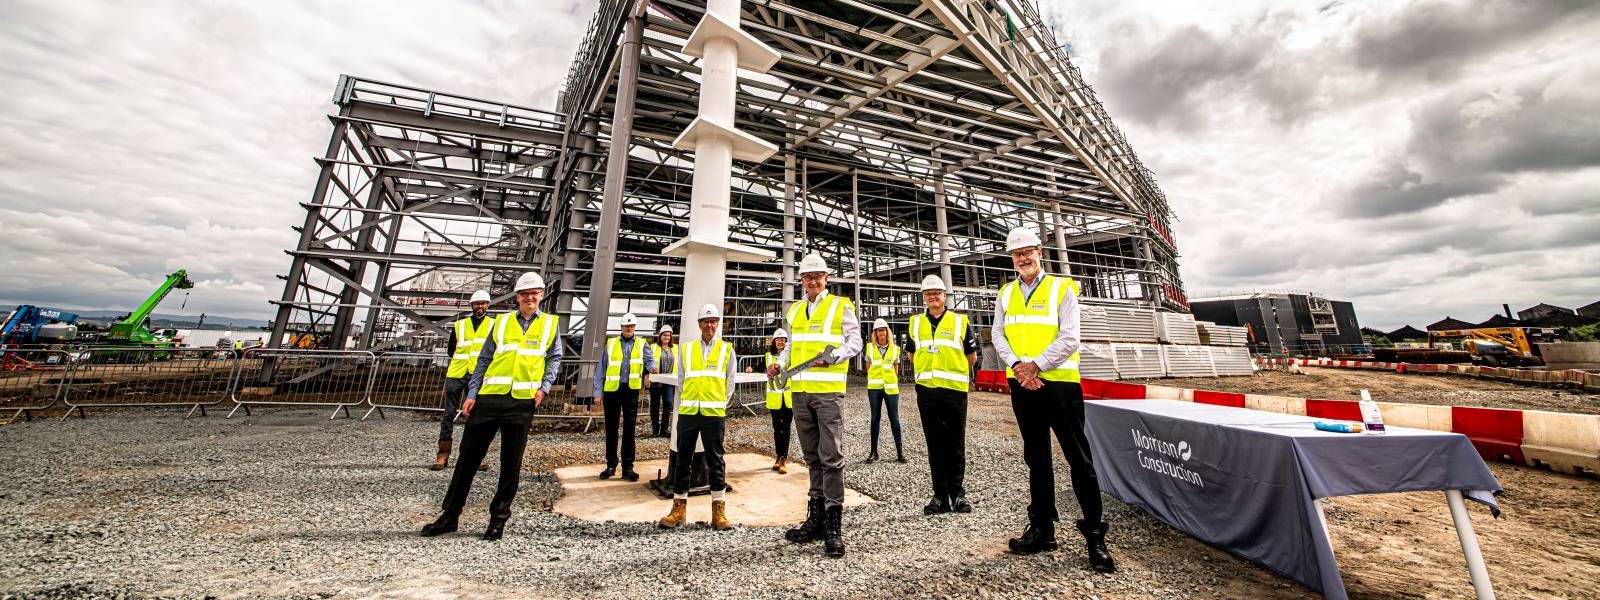 National Manufacturing Institute Scotland construction progress